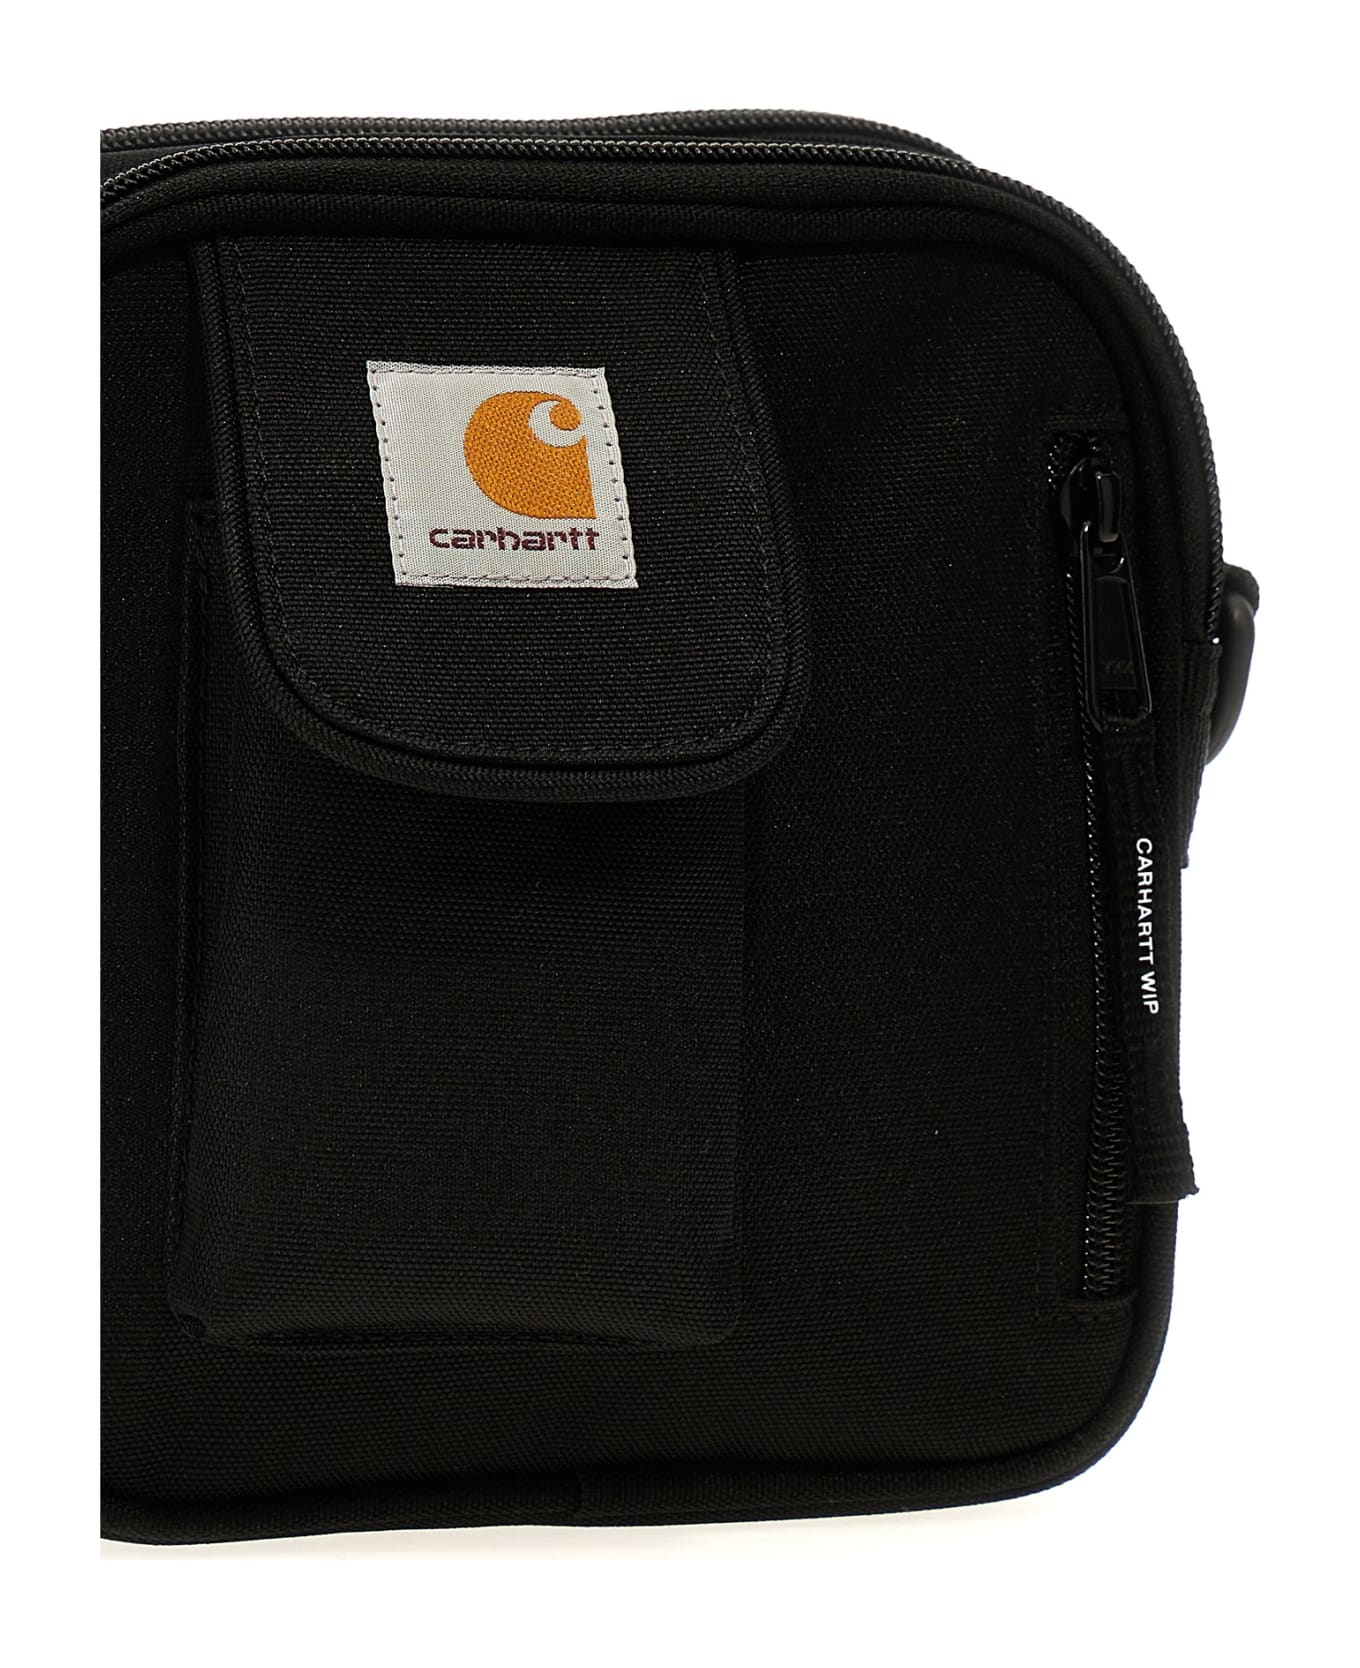 Carhartt 'essentials Bag Small' Crossbody Bag - Xx Black ショルダーバッグ